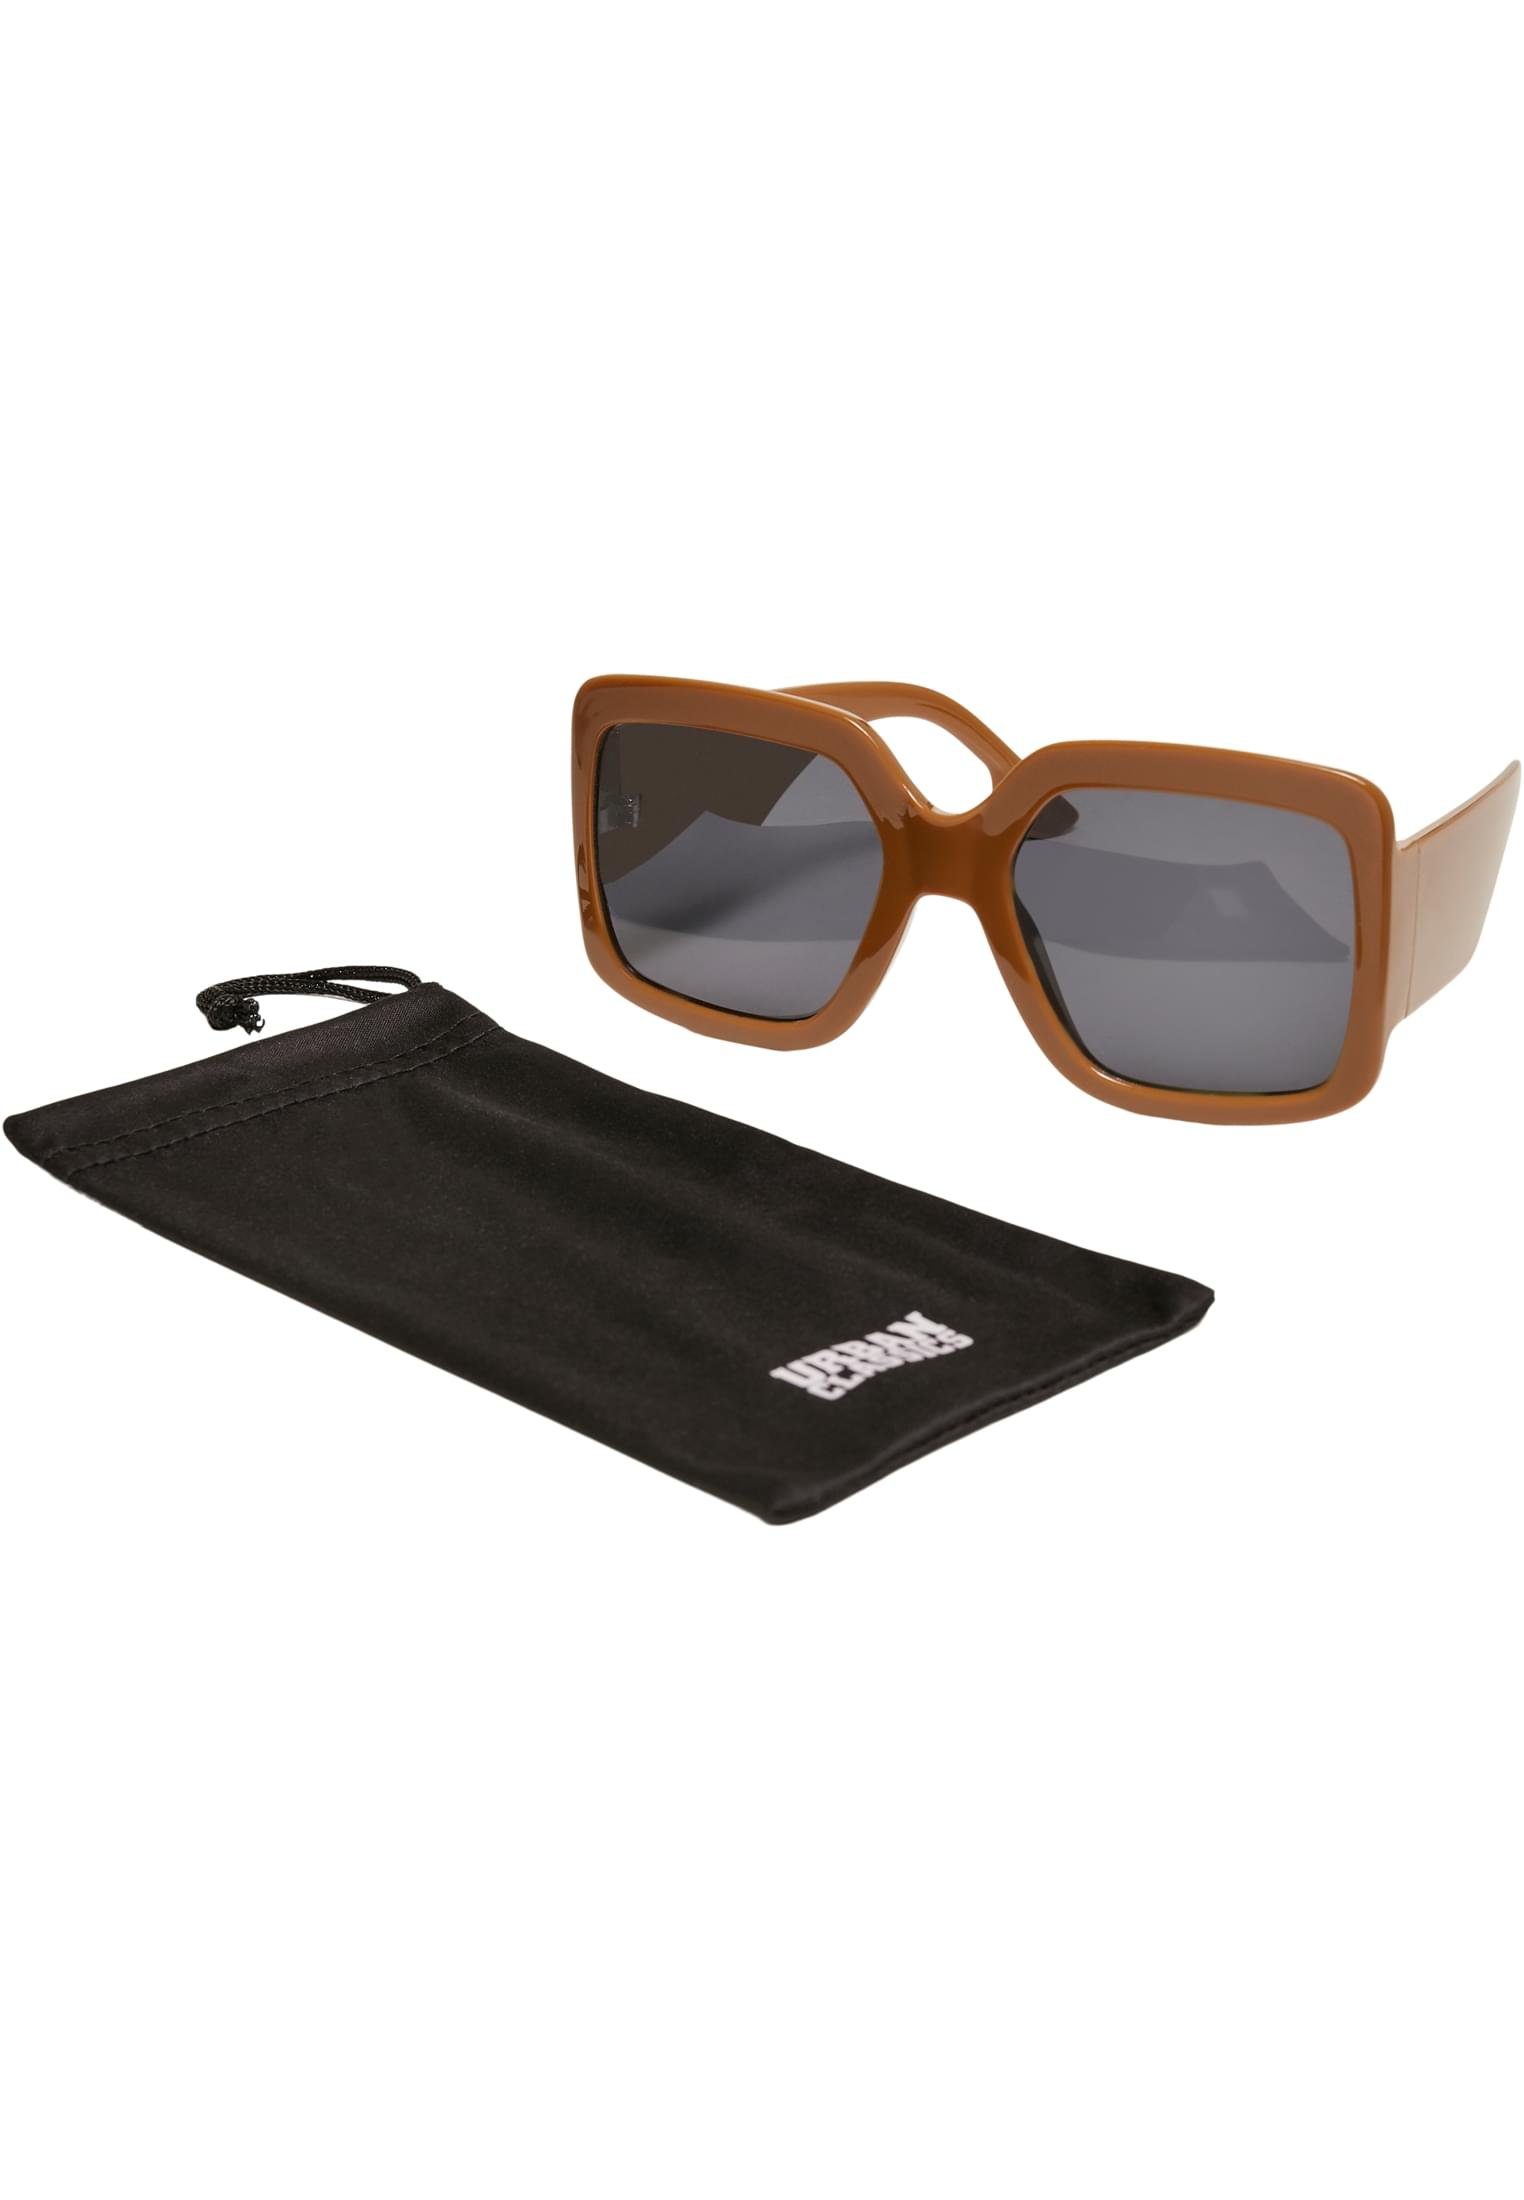 URBAN CLASSICS Sonnenbrille Accessoires Sunglasses Monaco, Ideal auch für  Sport im Freien geeignet